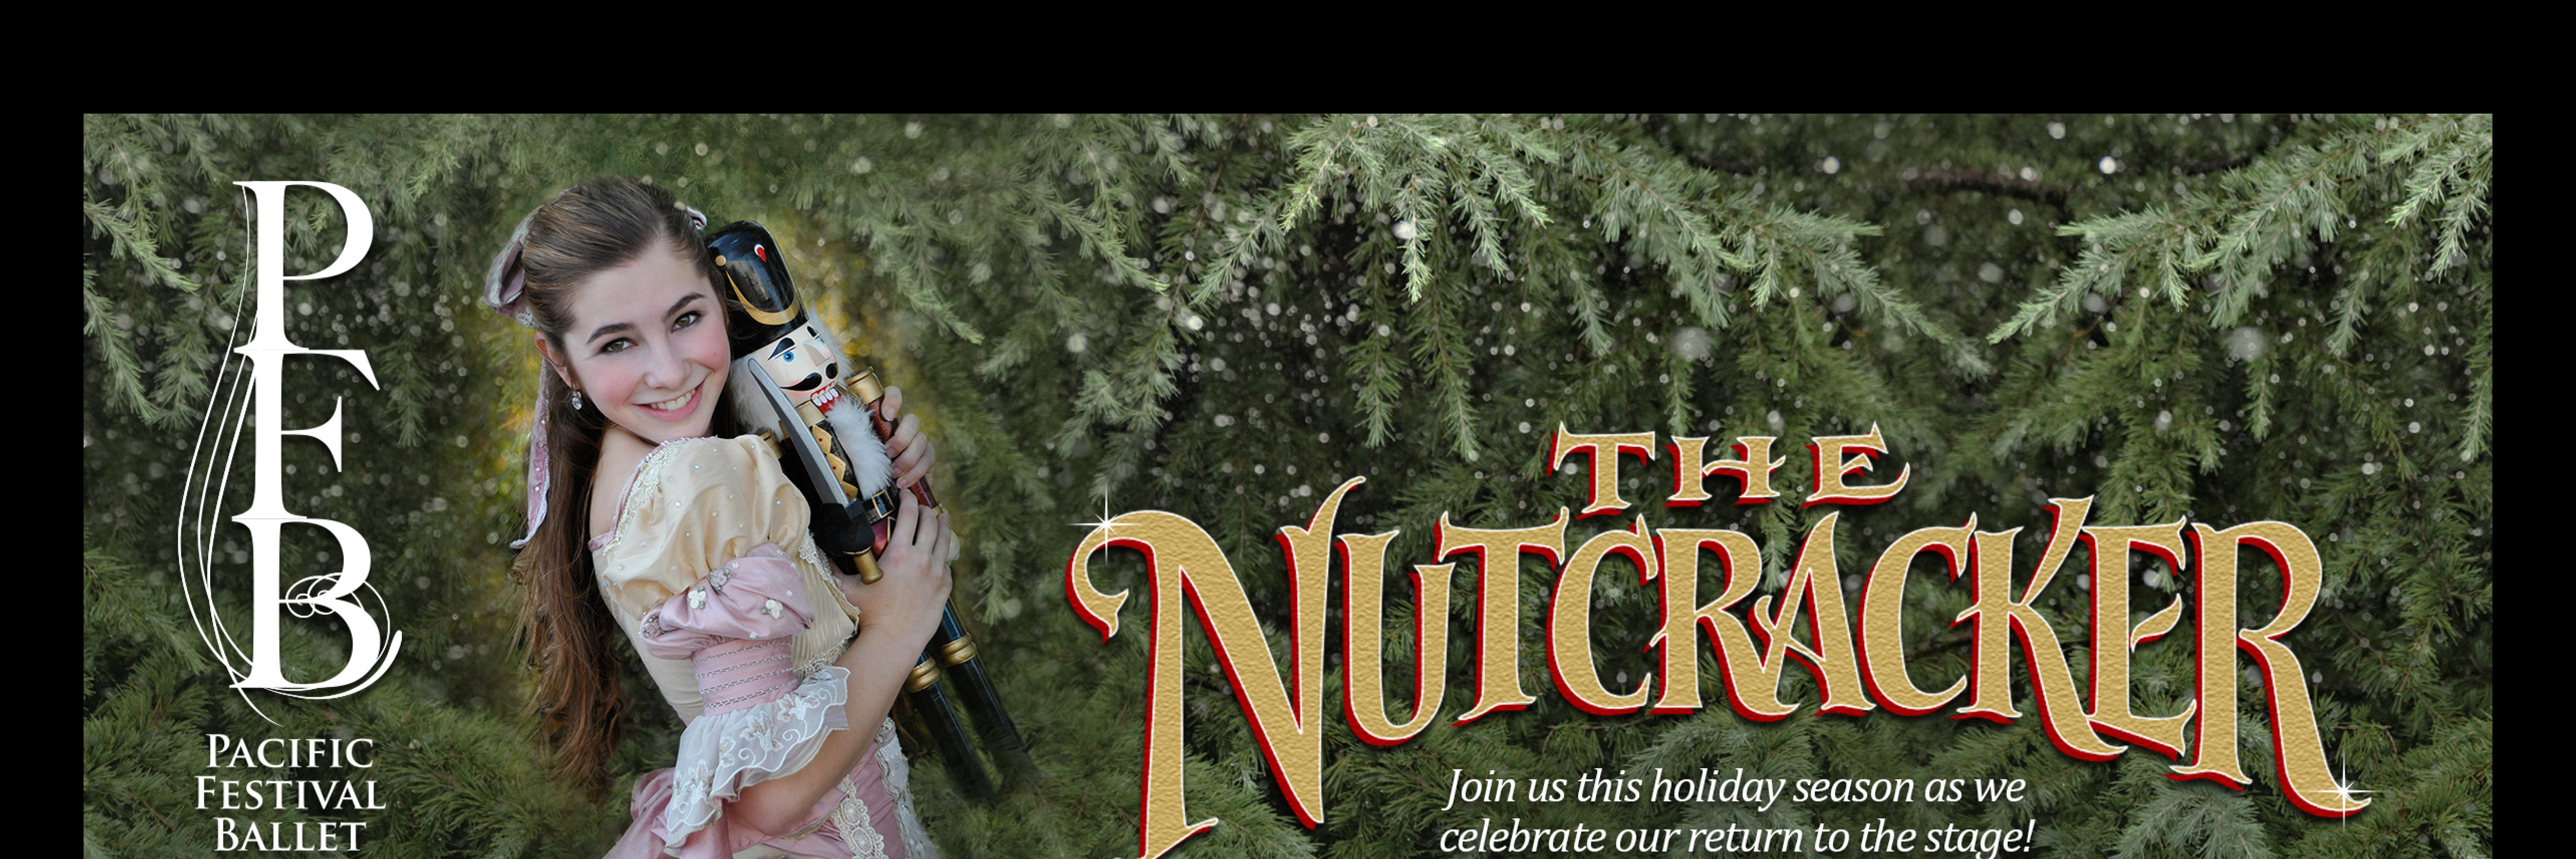 The Nutcracker - Pacific Festival Ballet